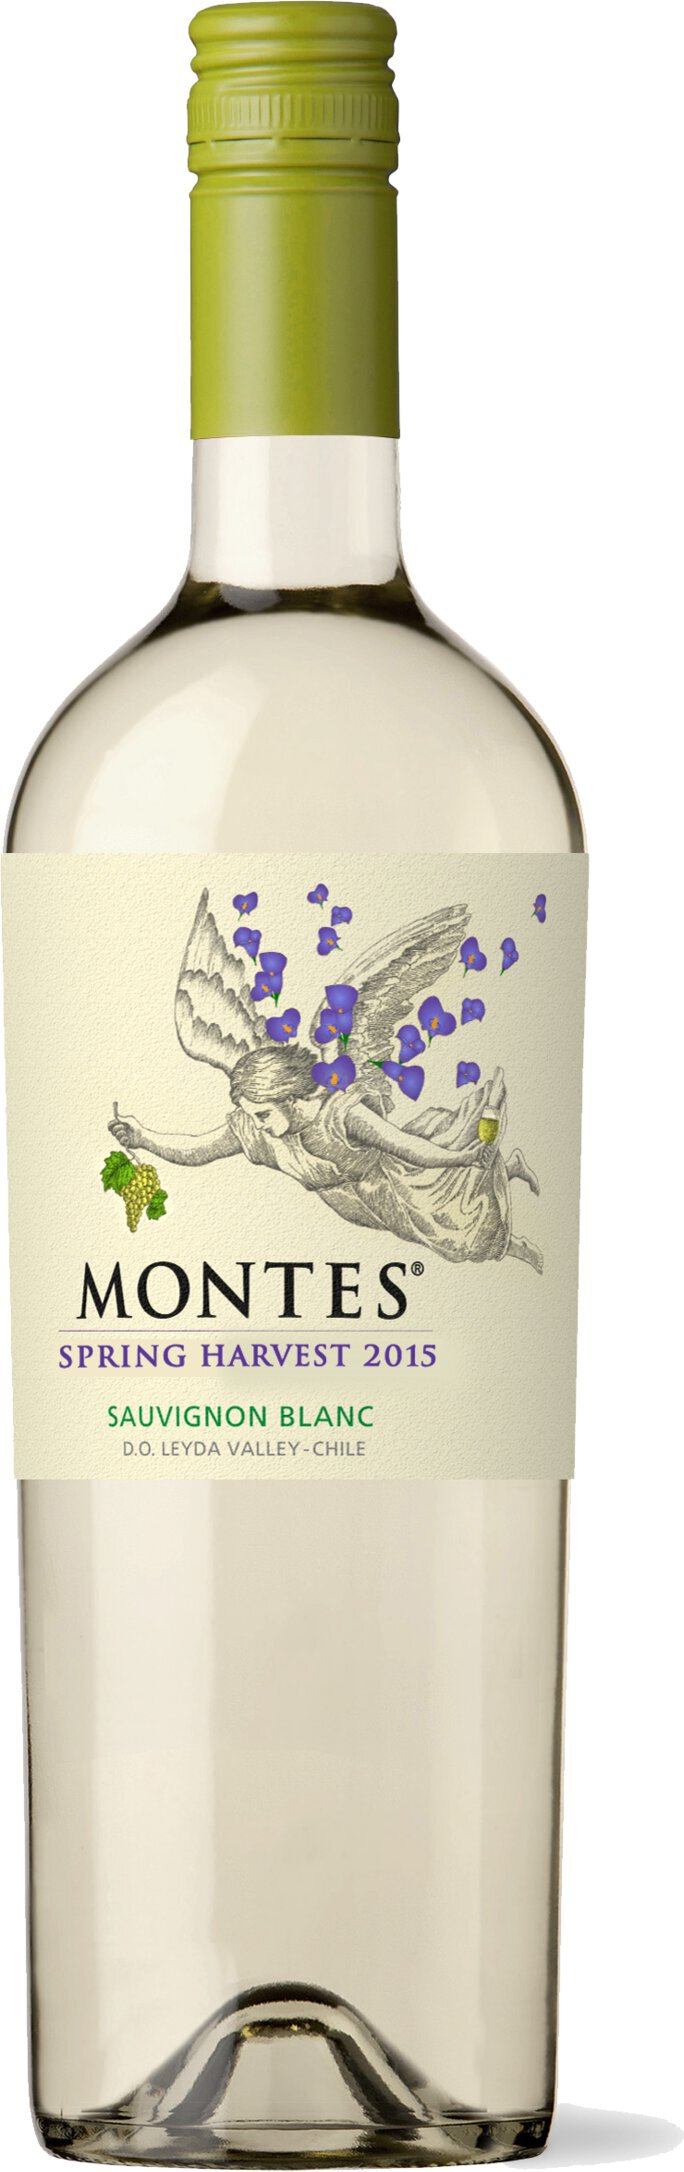 Montes Sauvignon Blanc Limited Selection